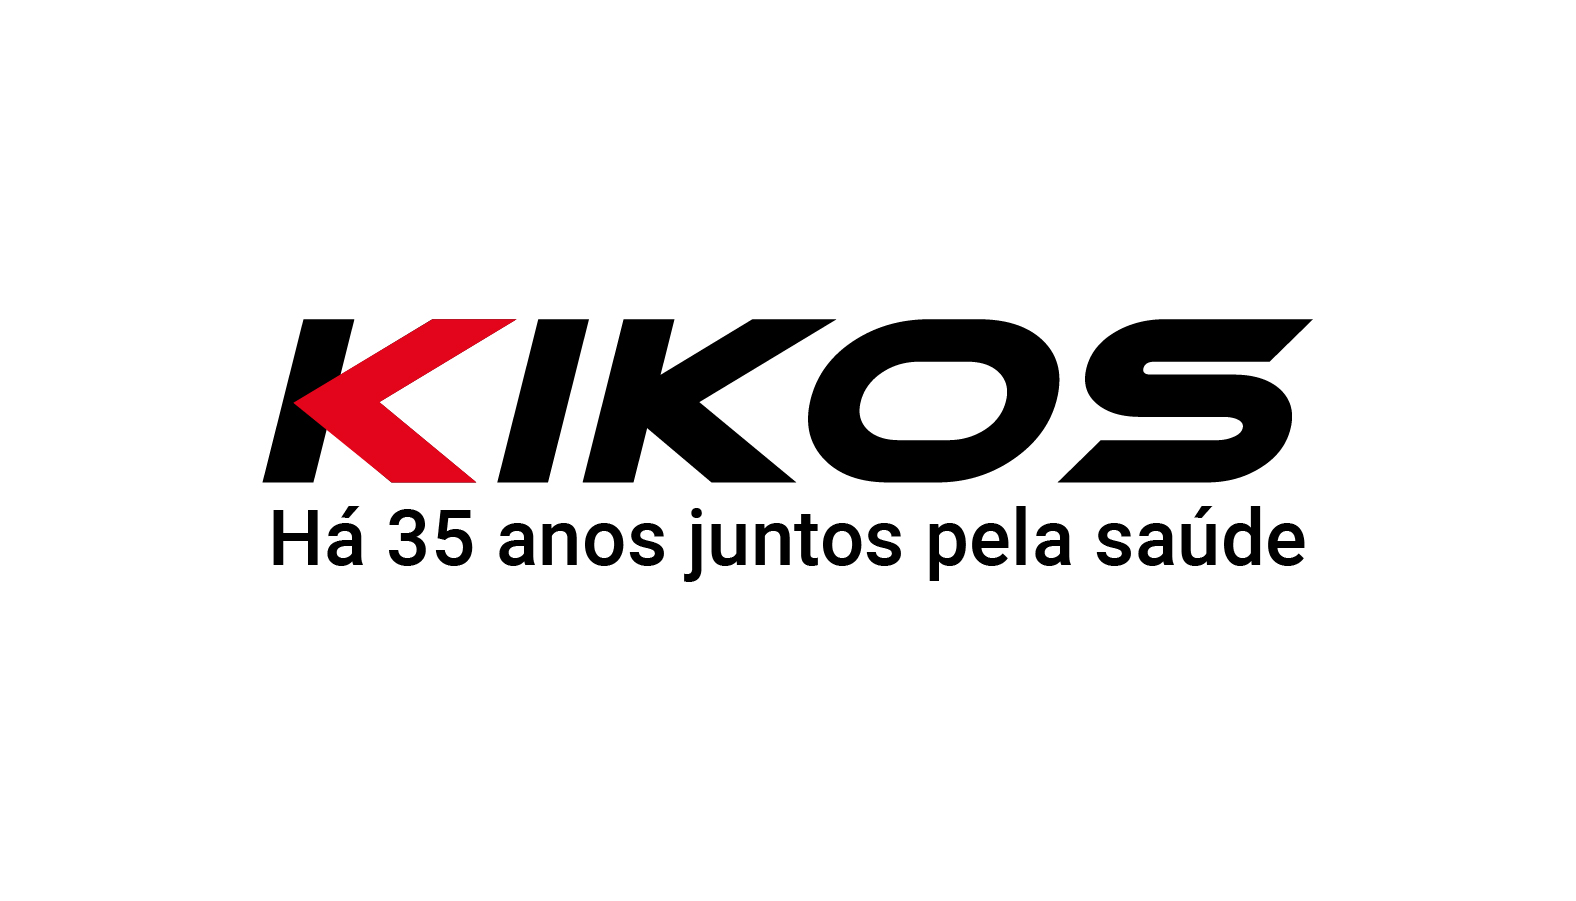 Logo KIKOS Ha 35 anos